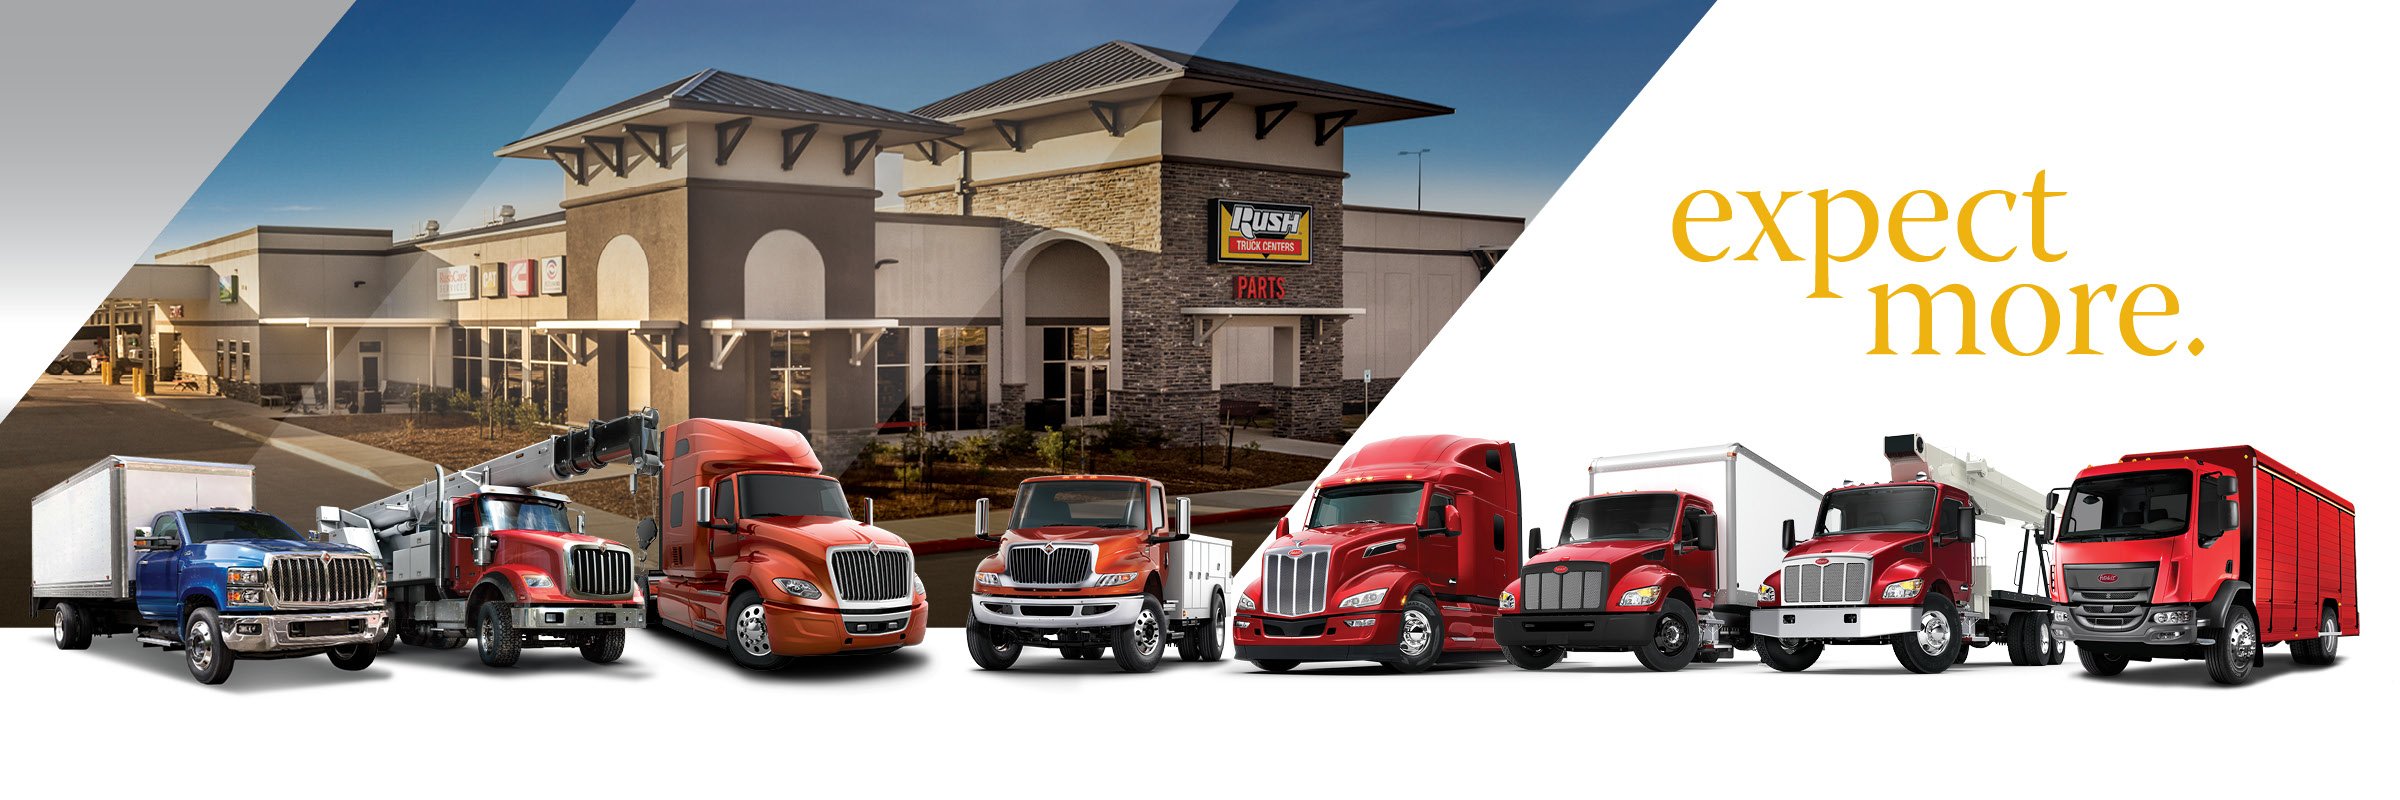 Trucks in front of Rush Truck Centers | New Truck Sales | New Trucks for Sale | Semi Trucks for Sale | 18 Wheeler Trucks